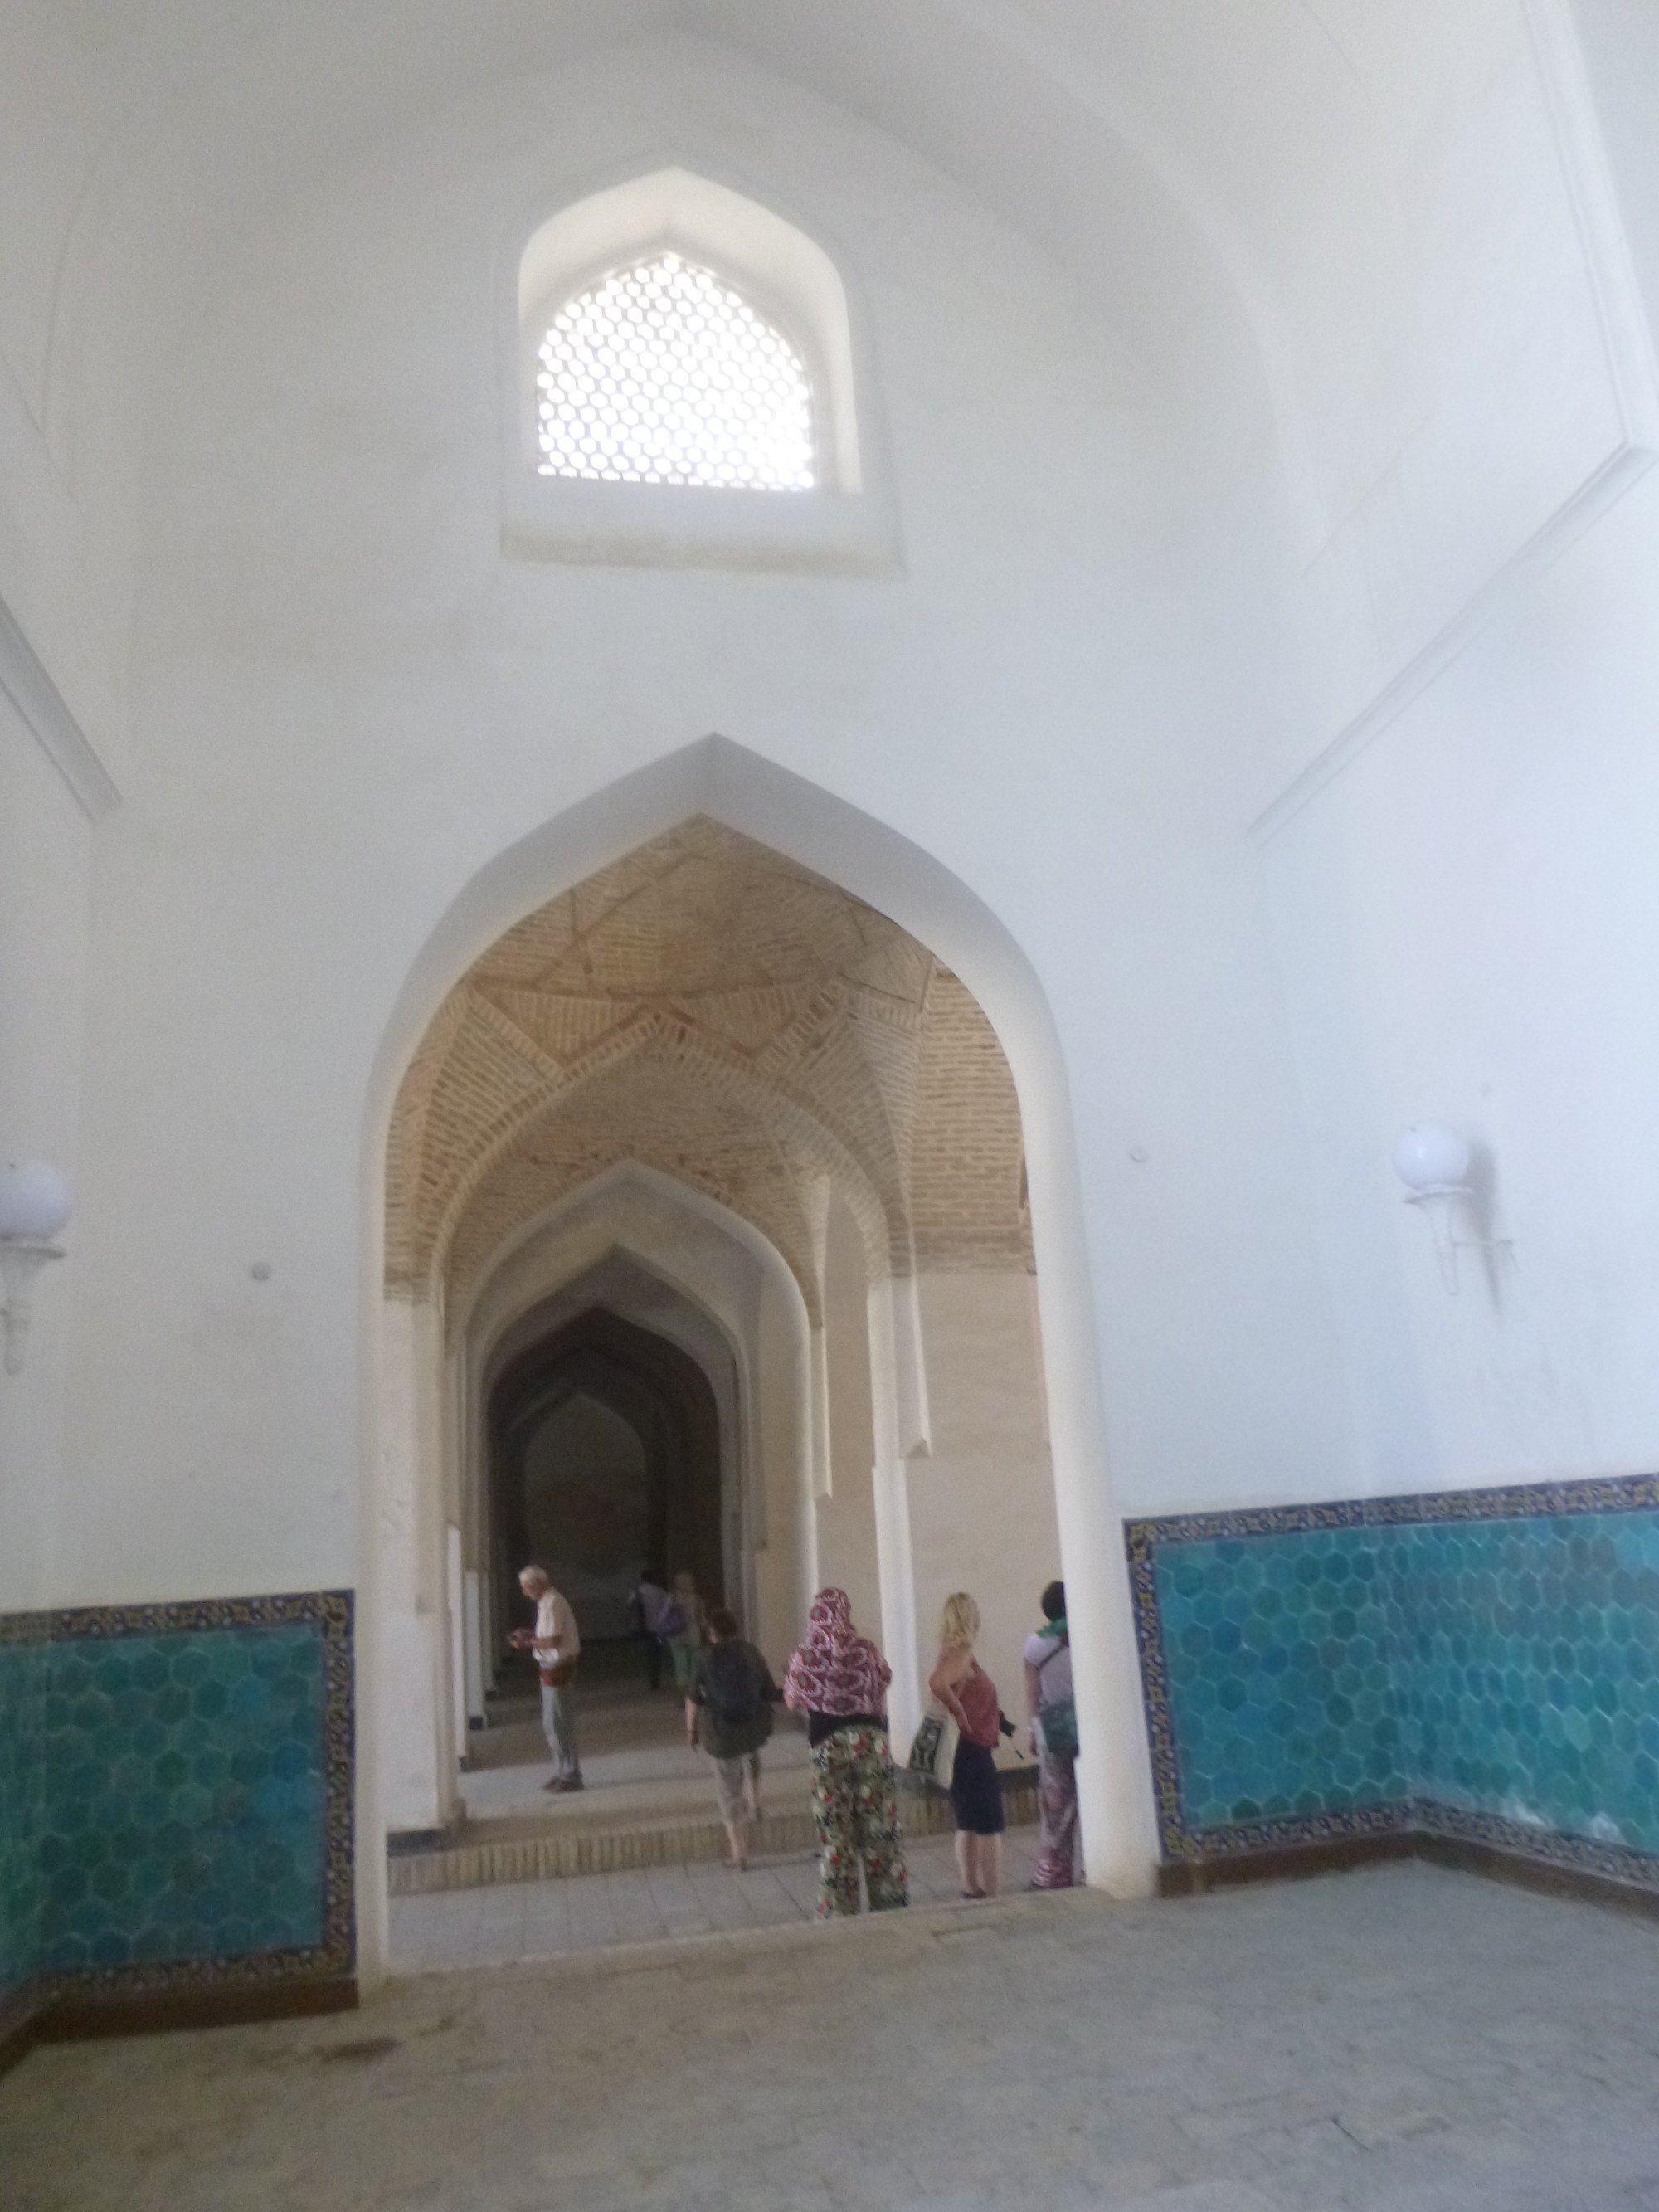 Masjidi Kalon<br/>
Mosque